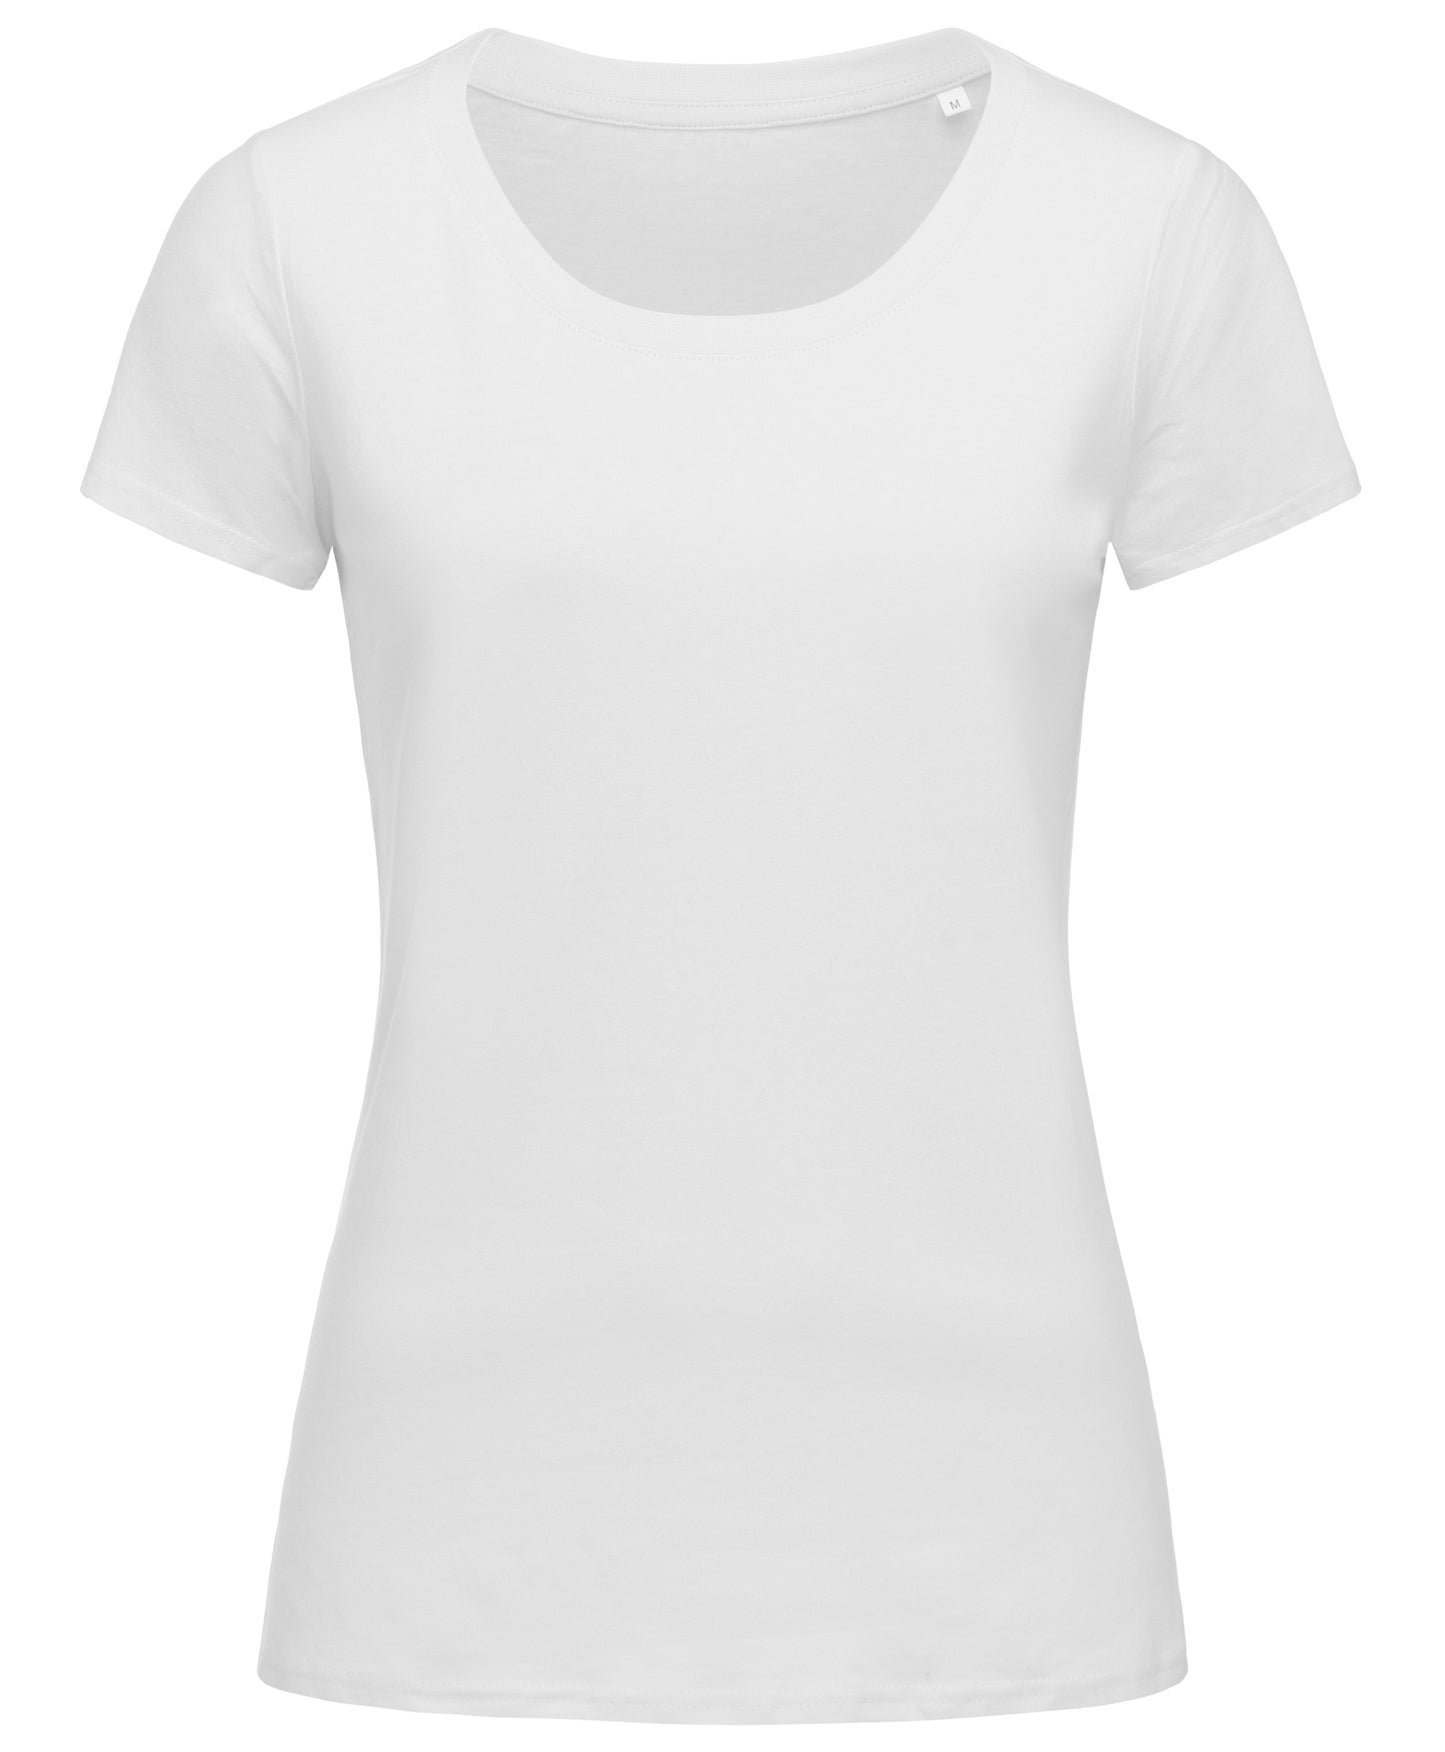 Stedman Janet Ladies Organic Cotton Crew Neck T-Shirt